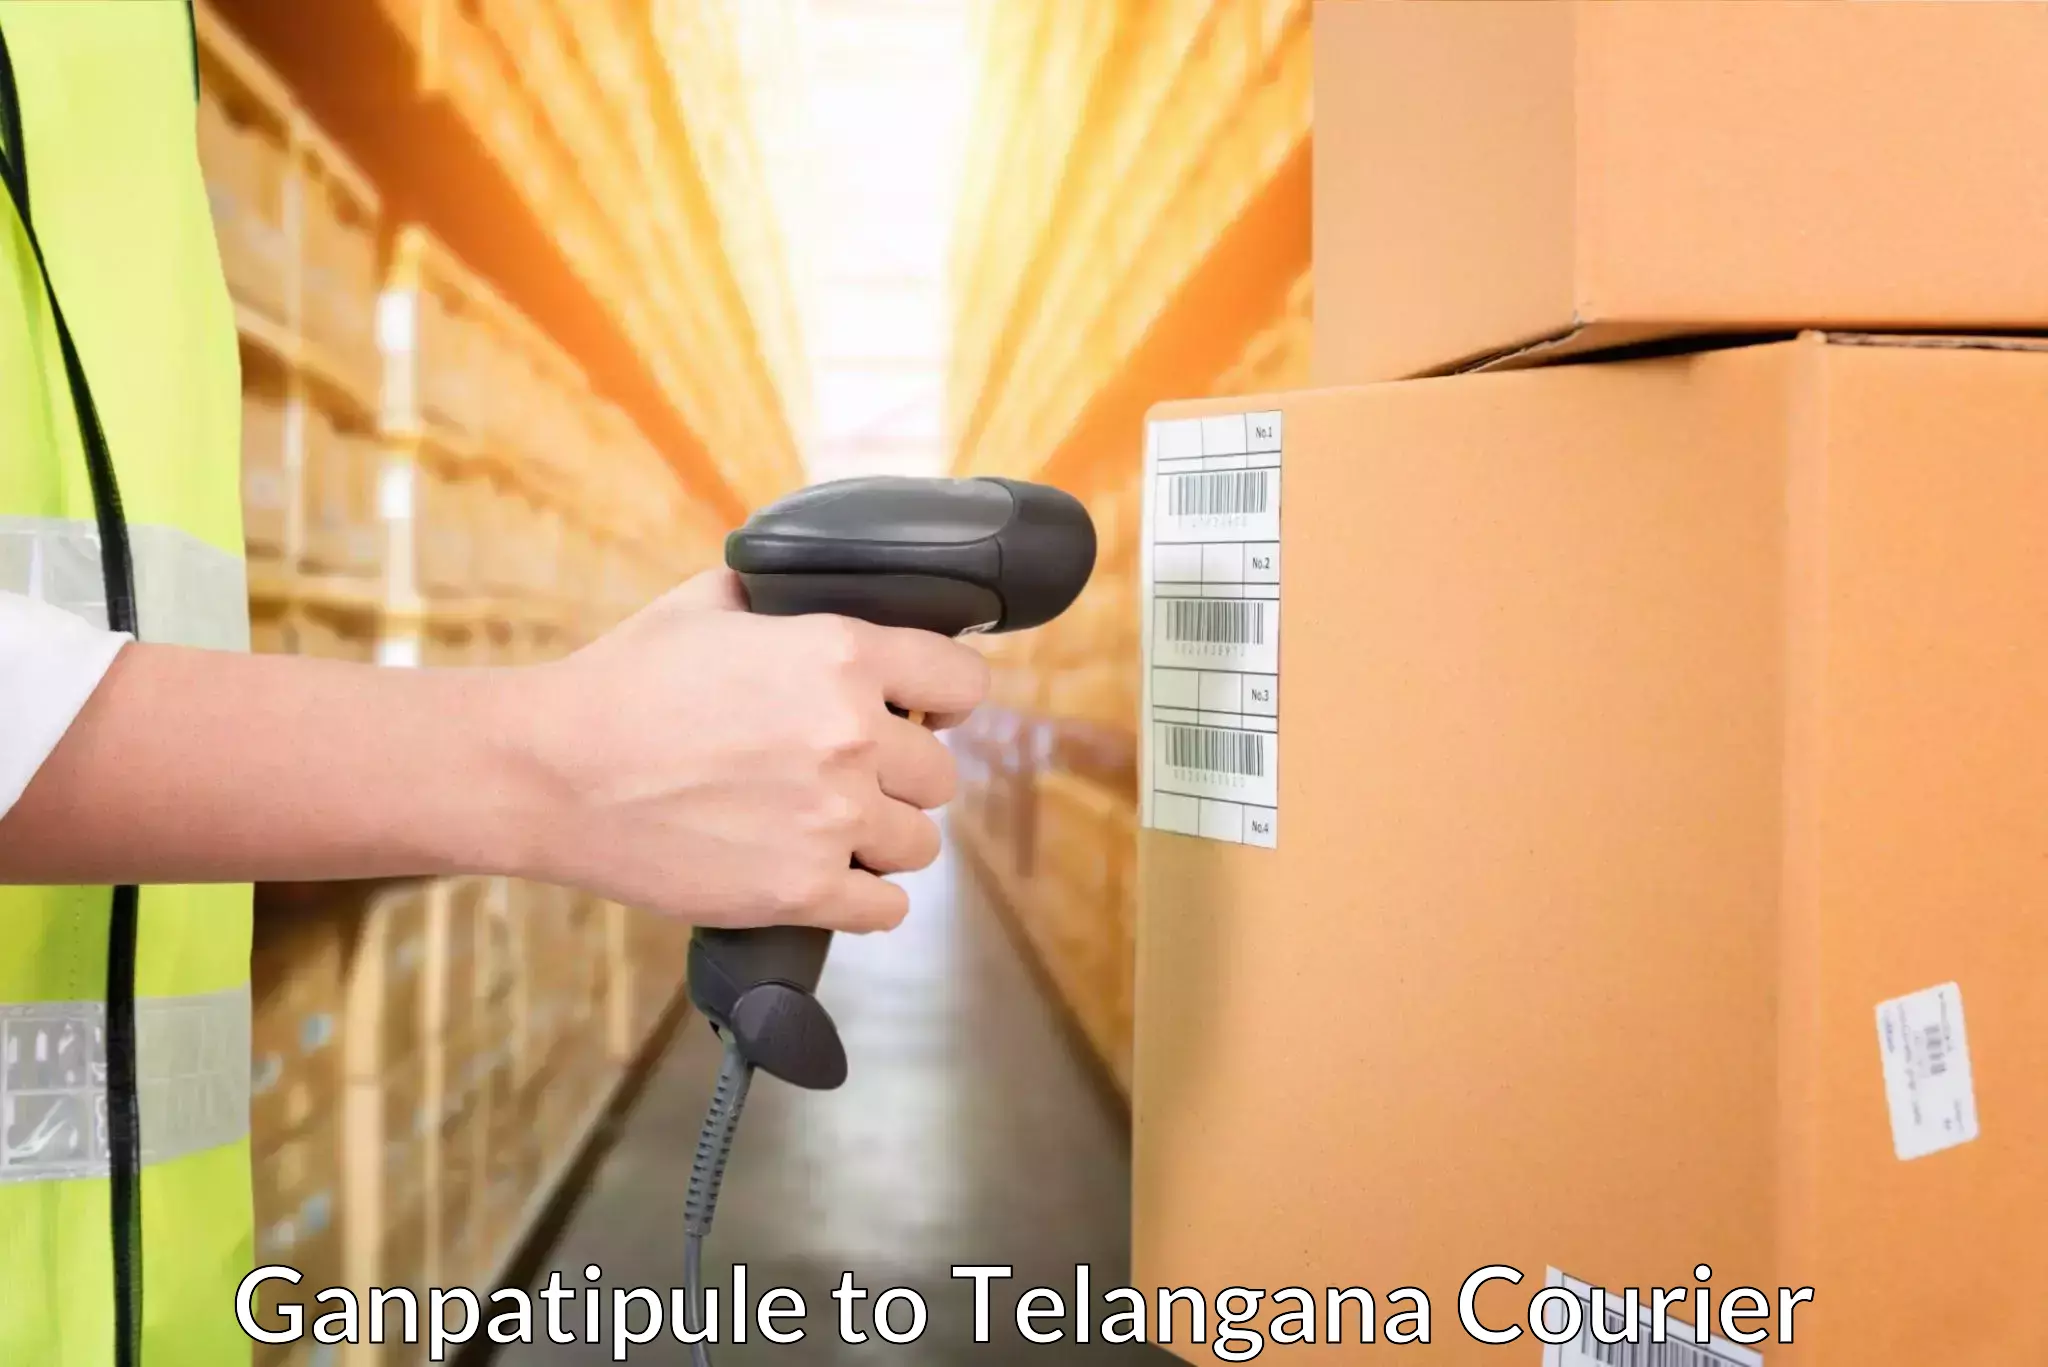 Express logistics providers Ganpatipule to Yellandu